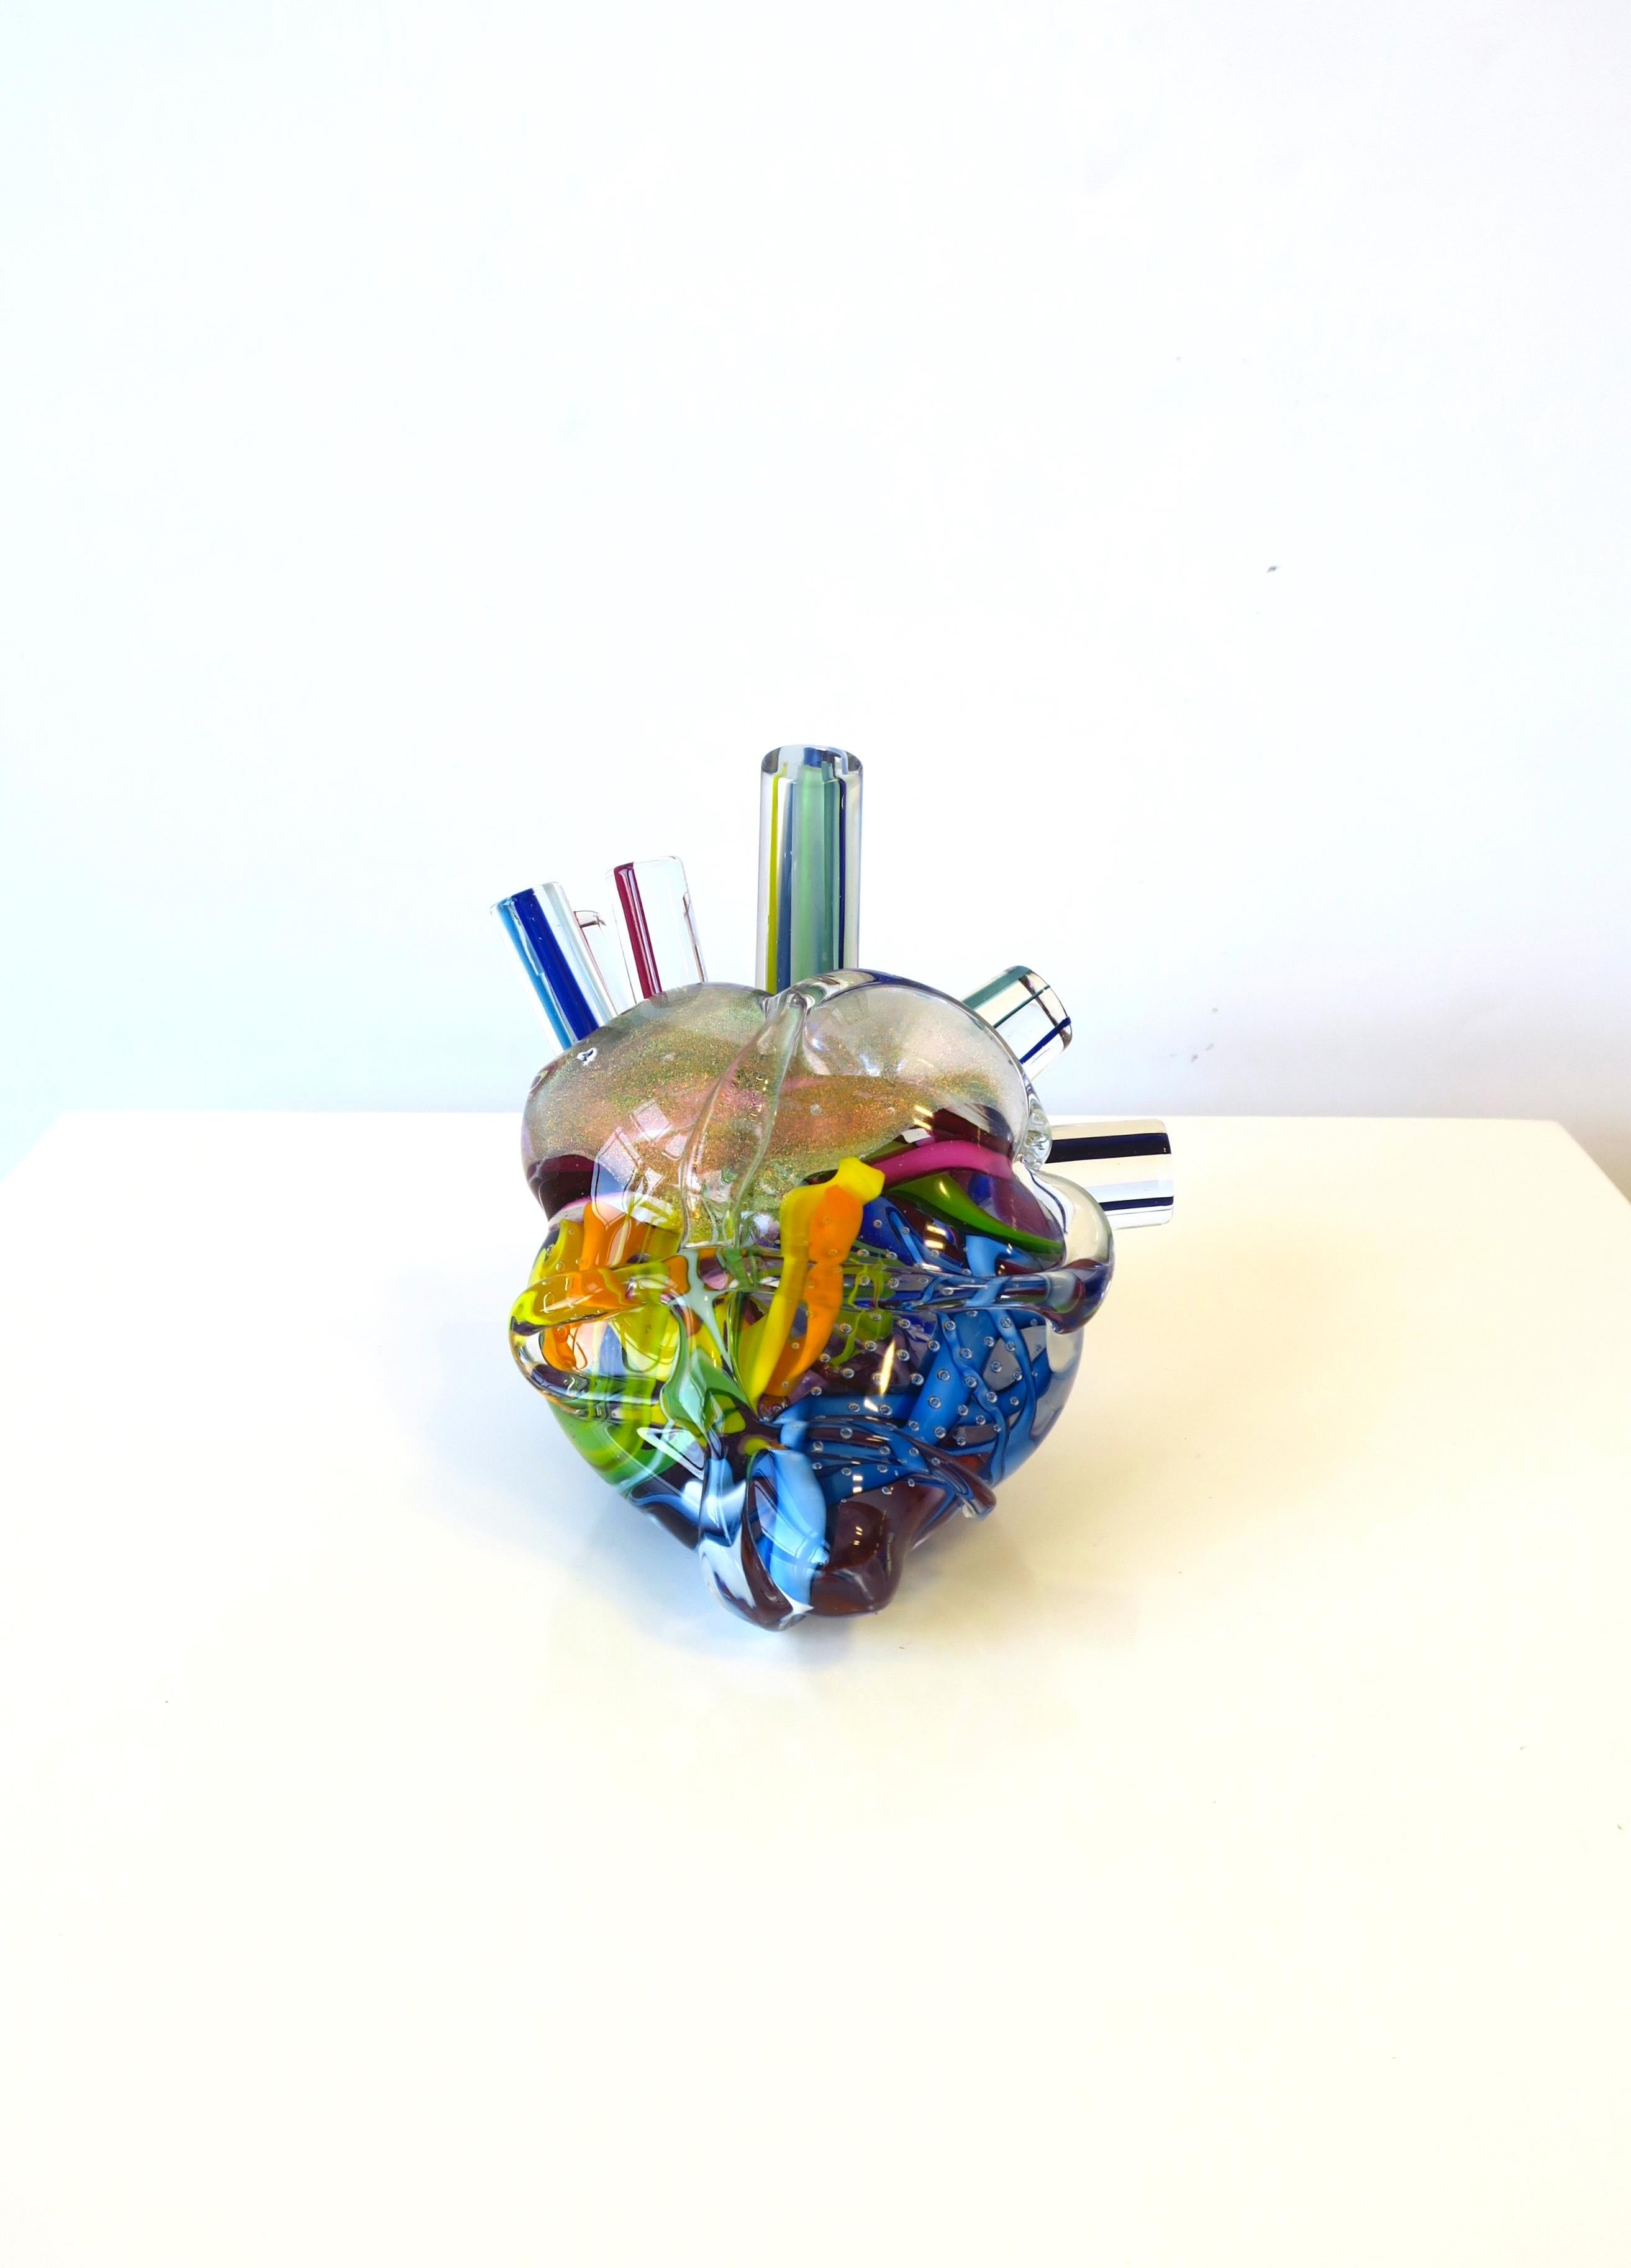 Hand-Crafted Heart of Glass Human Heart Art Glass Sculpture Signed by Artist